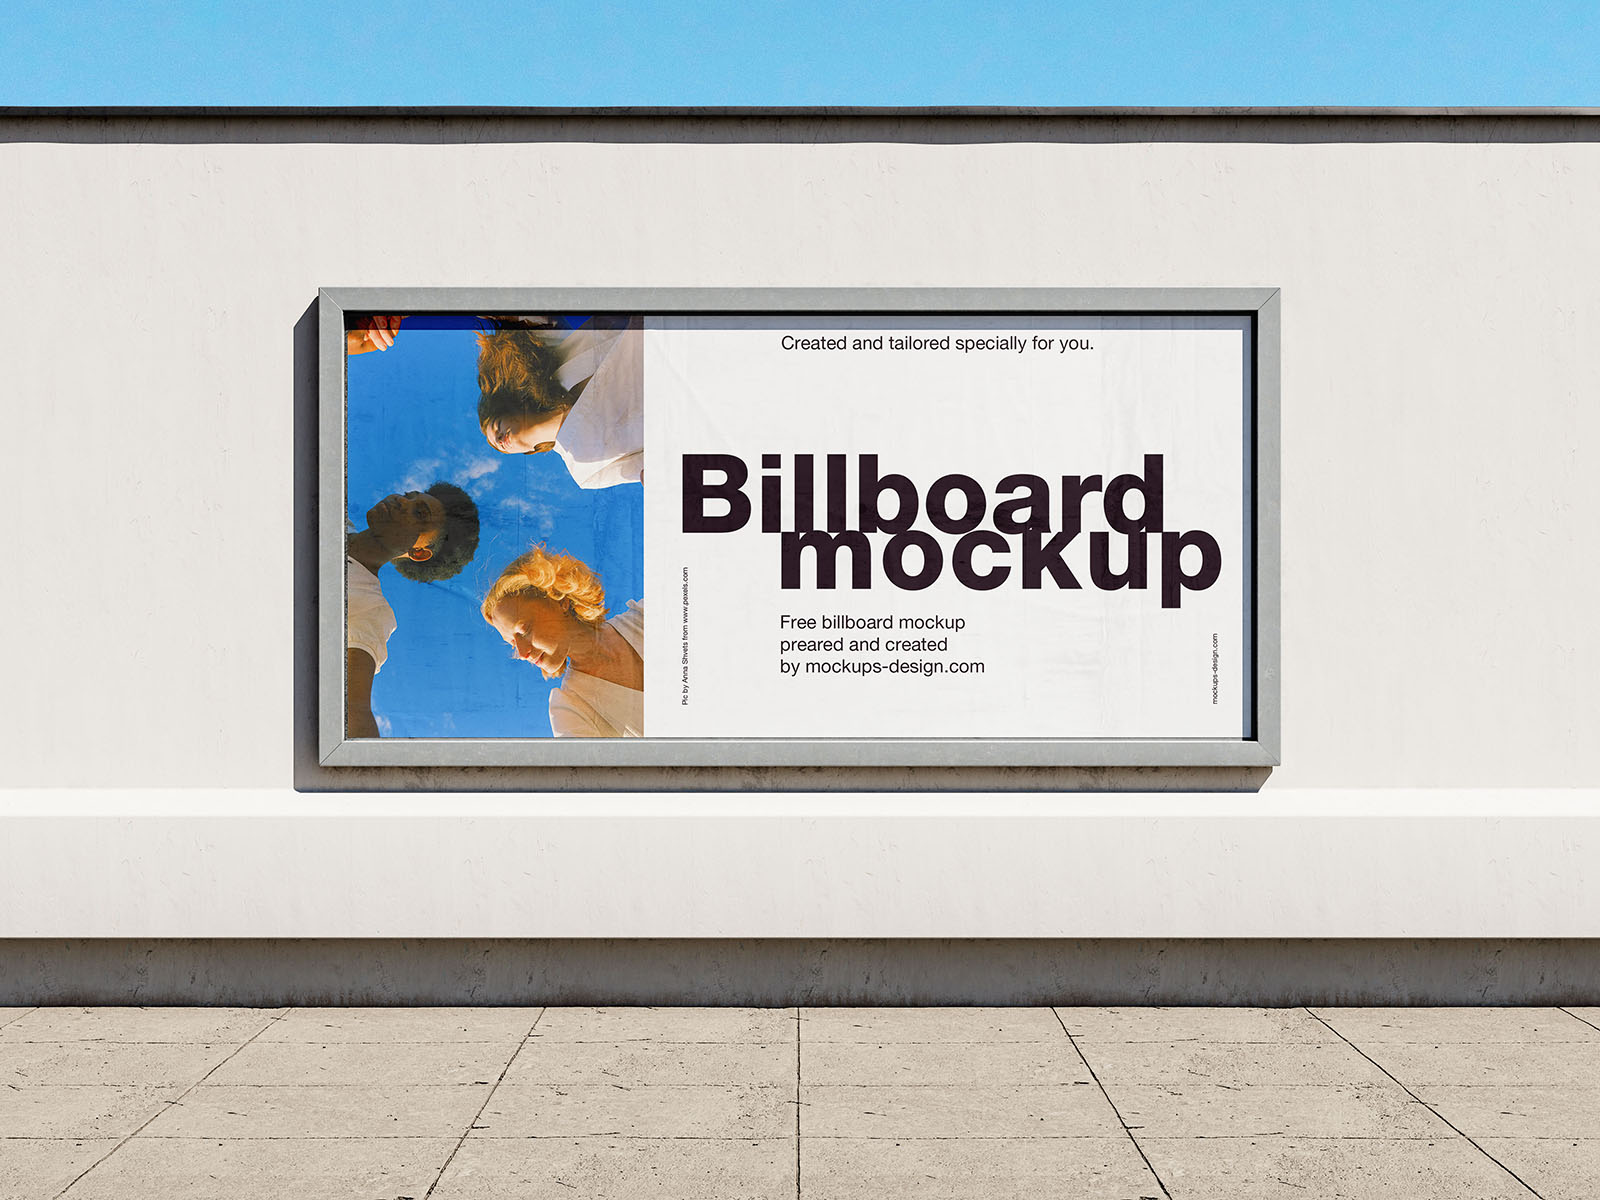 Clean and simple billboard mockup